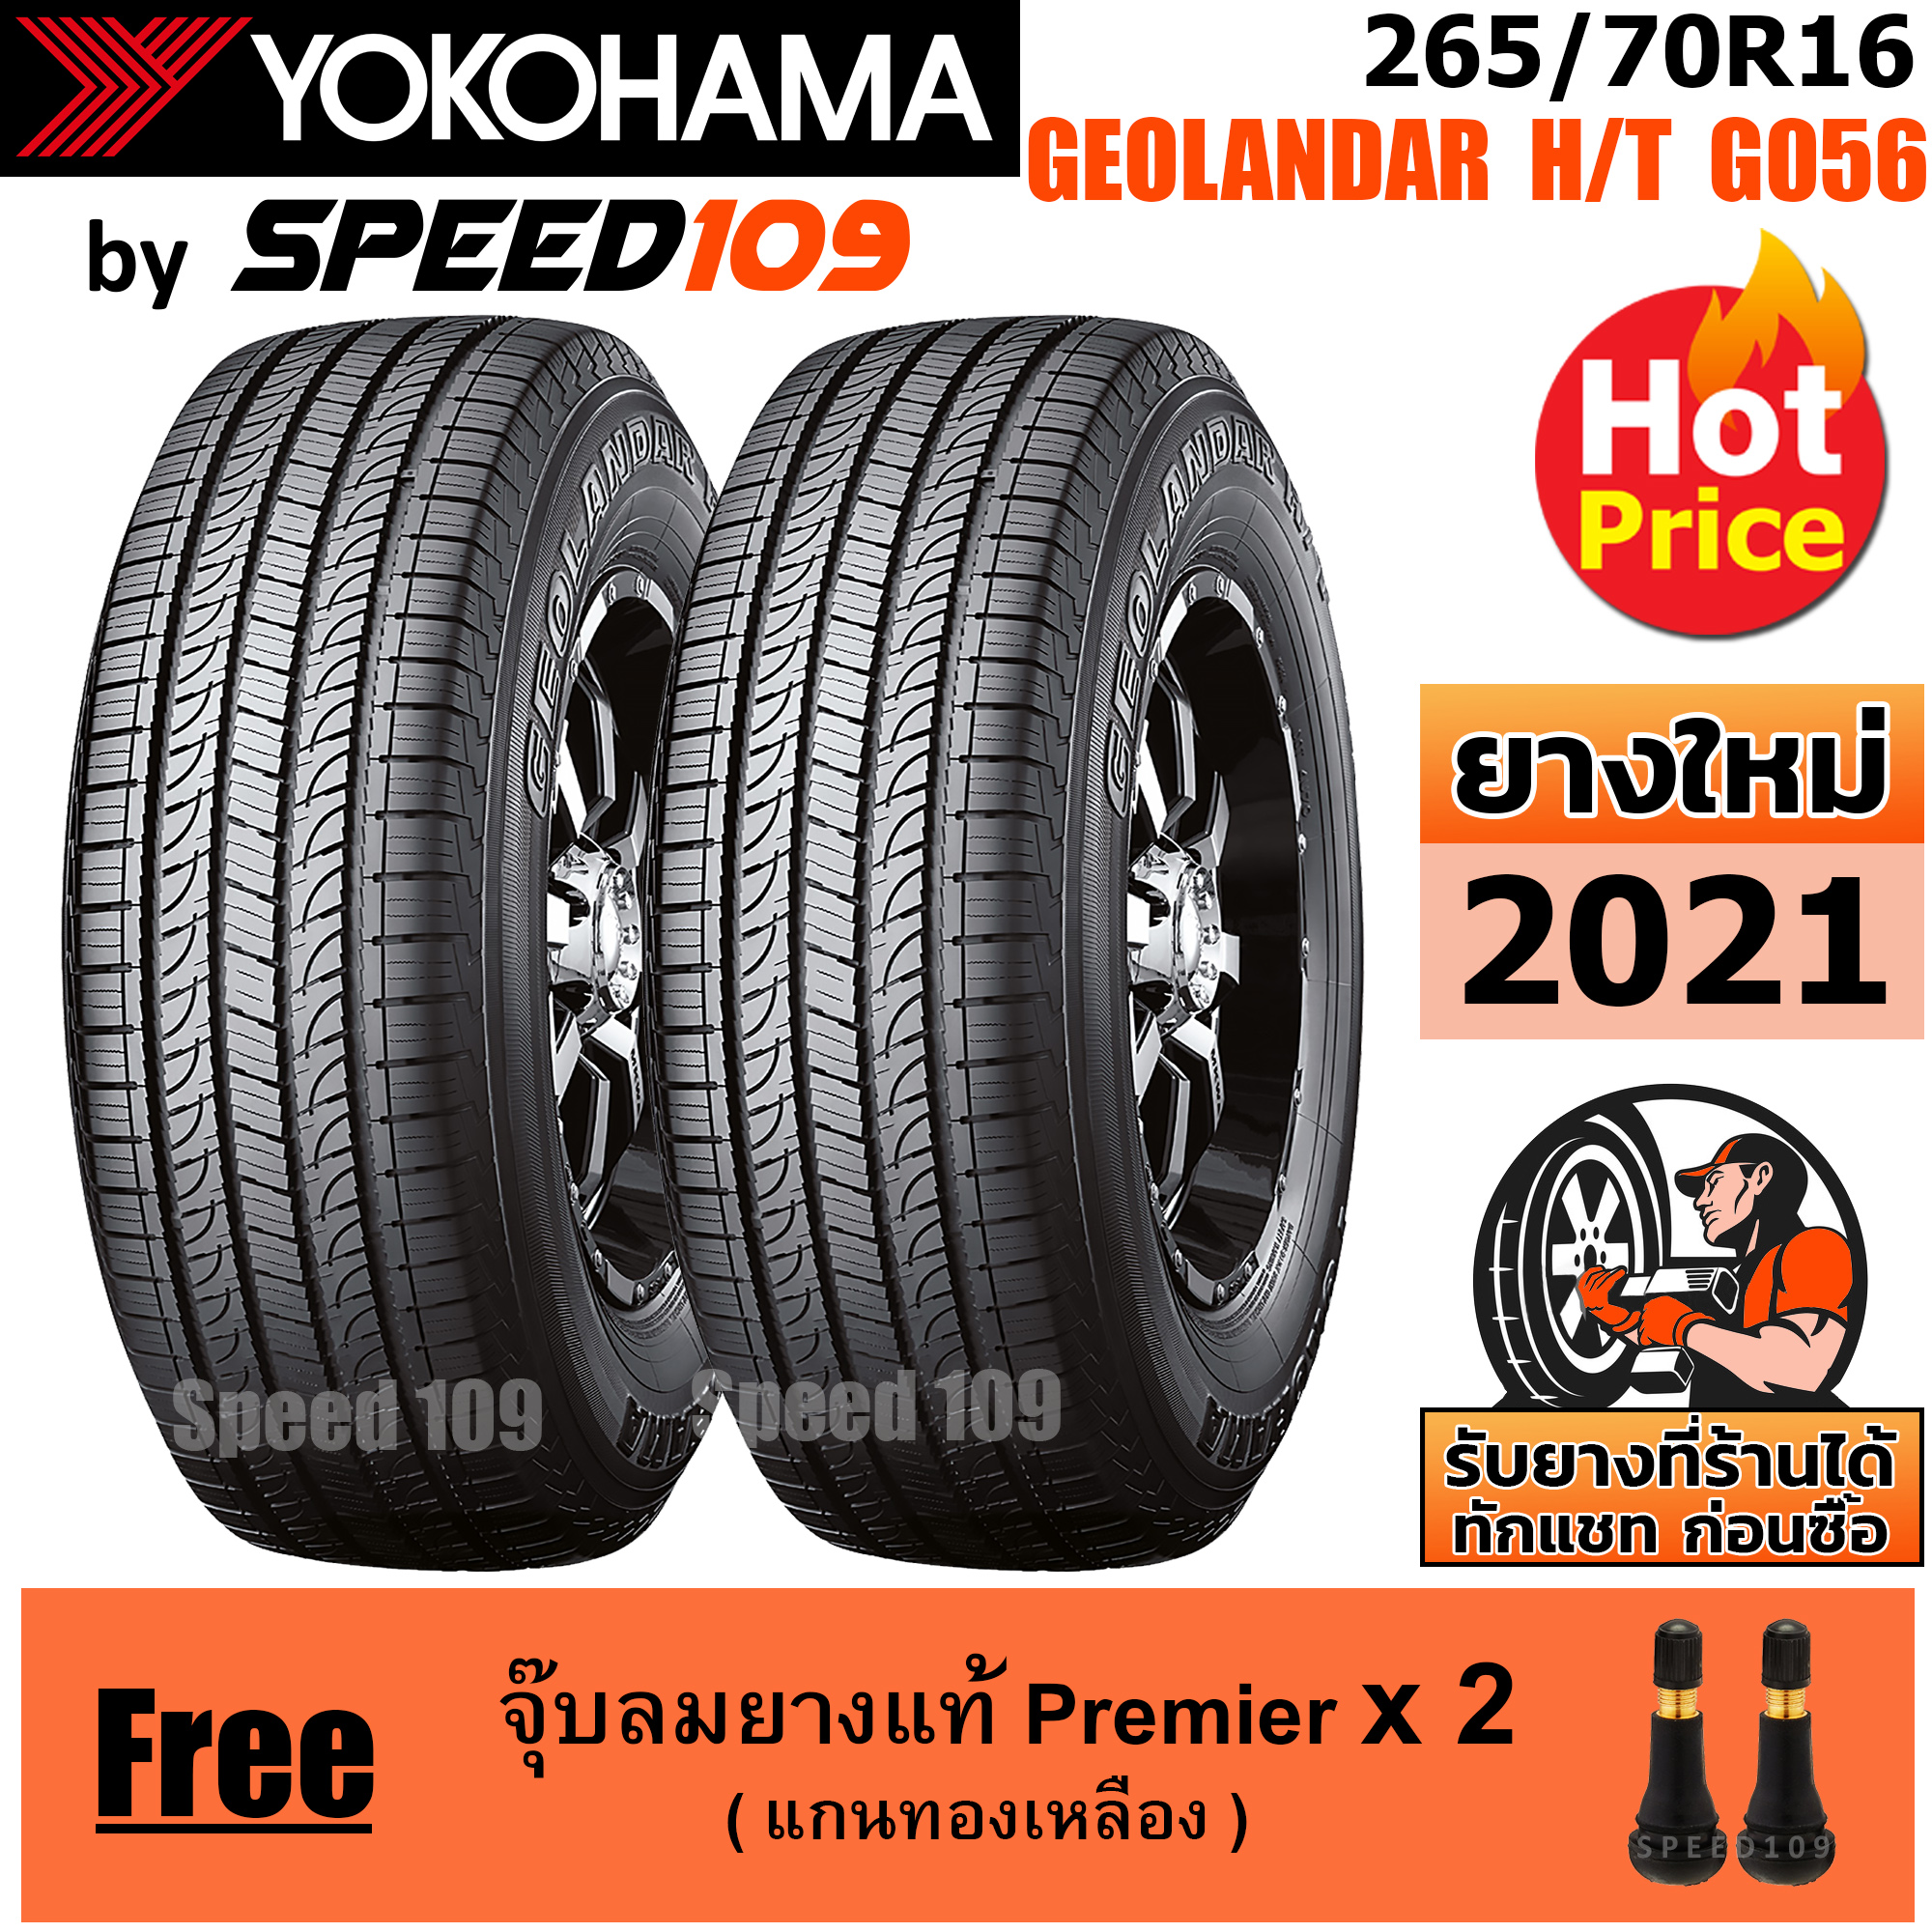 YOKOHAMA ยางรถยนต์ ขอบ 16 ขนาด 265/70R16 รุ่น GEOLANDAR H/T G056 - 2 เส้น (ปี 2021)